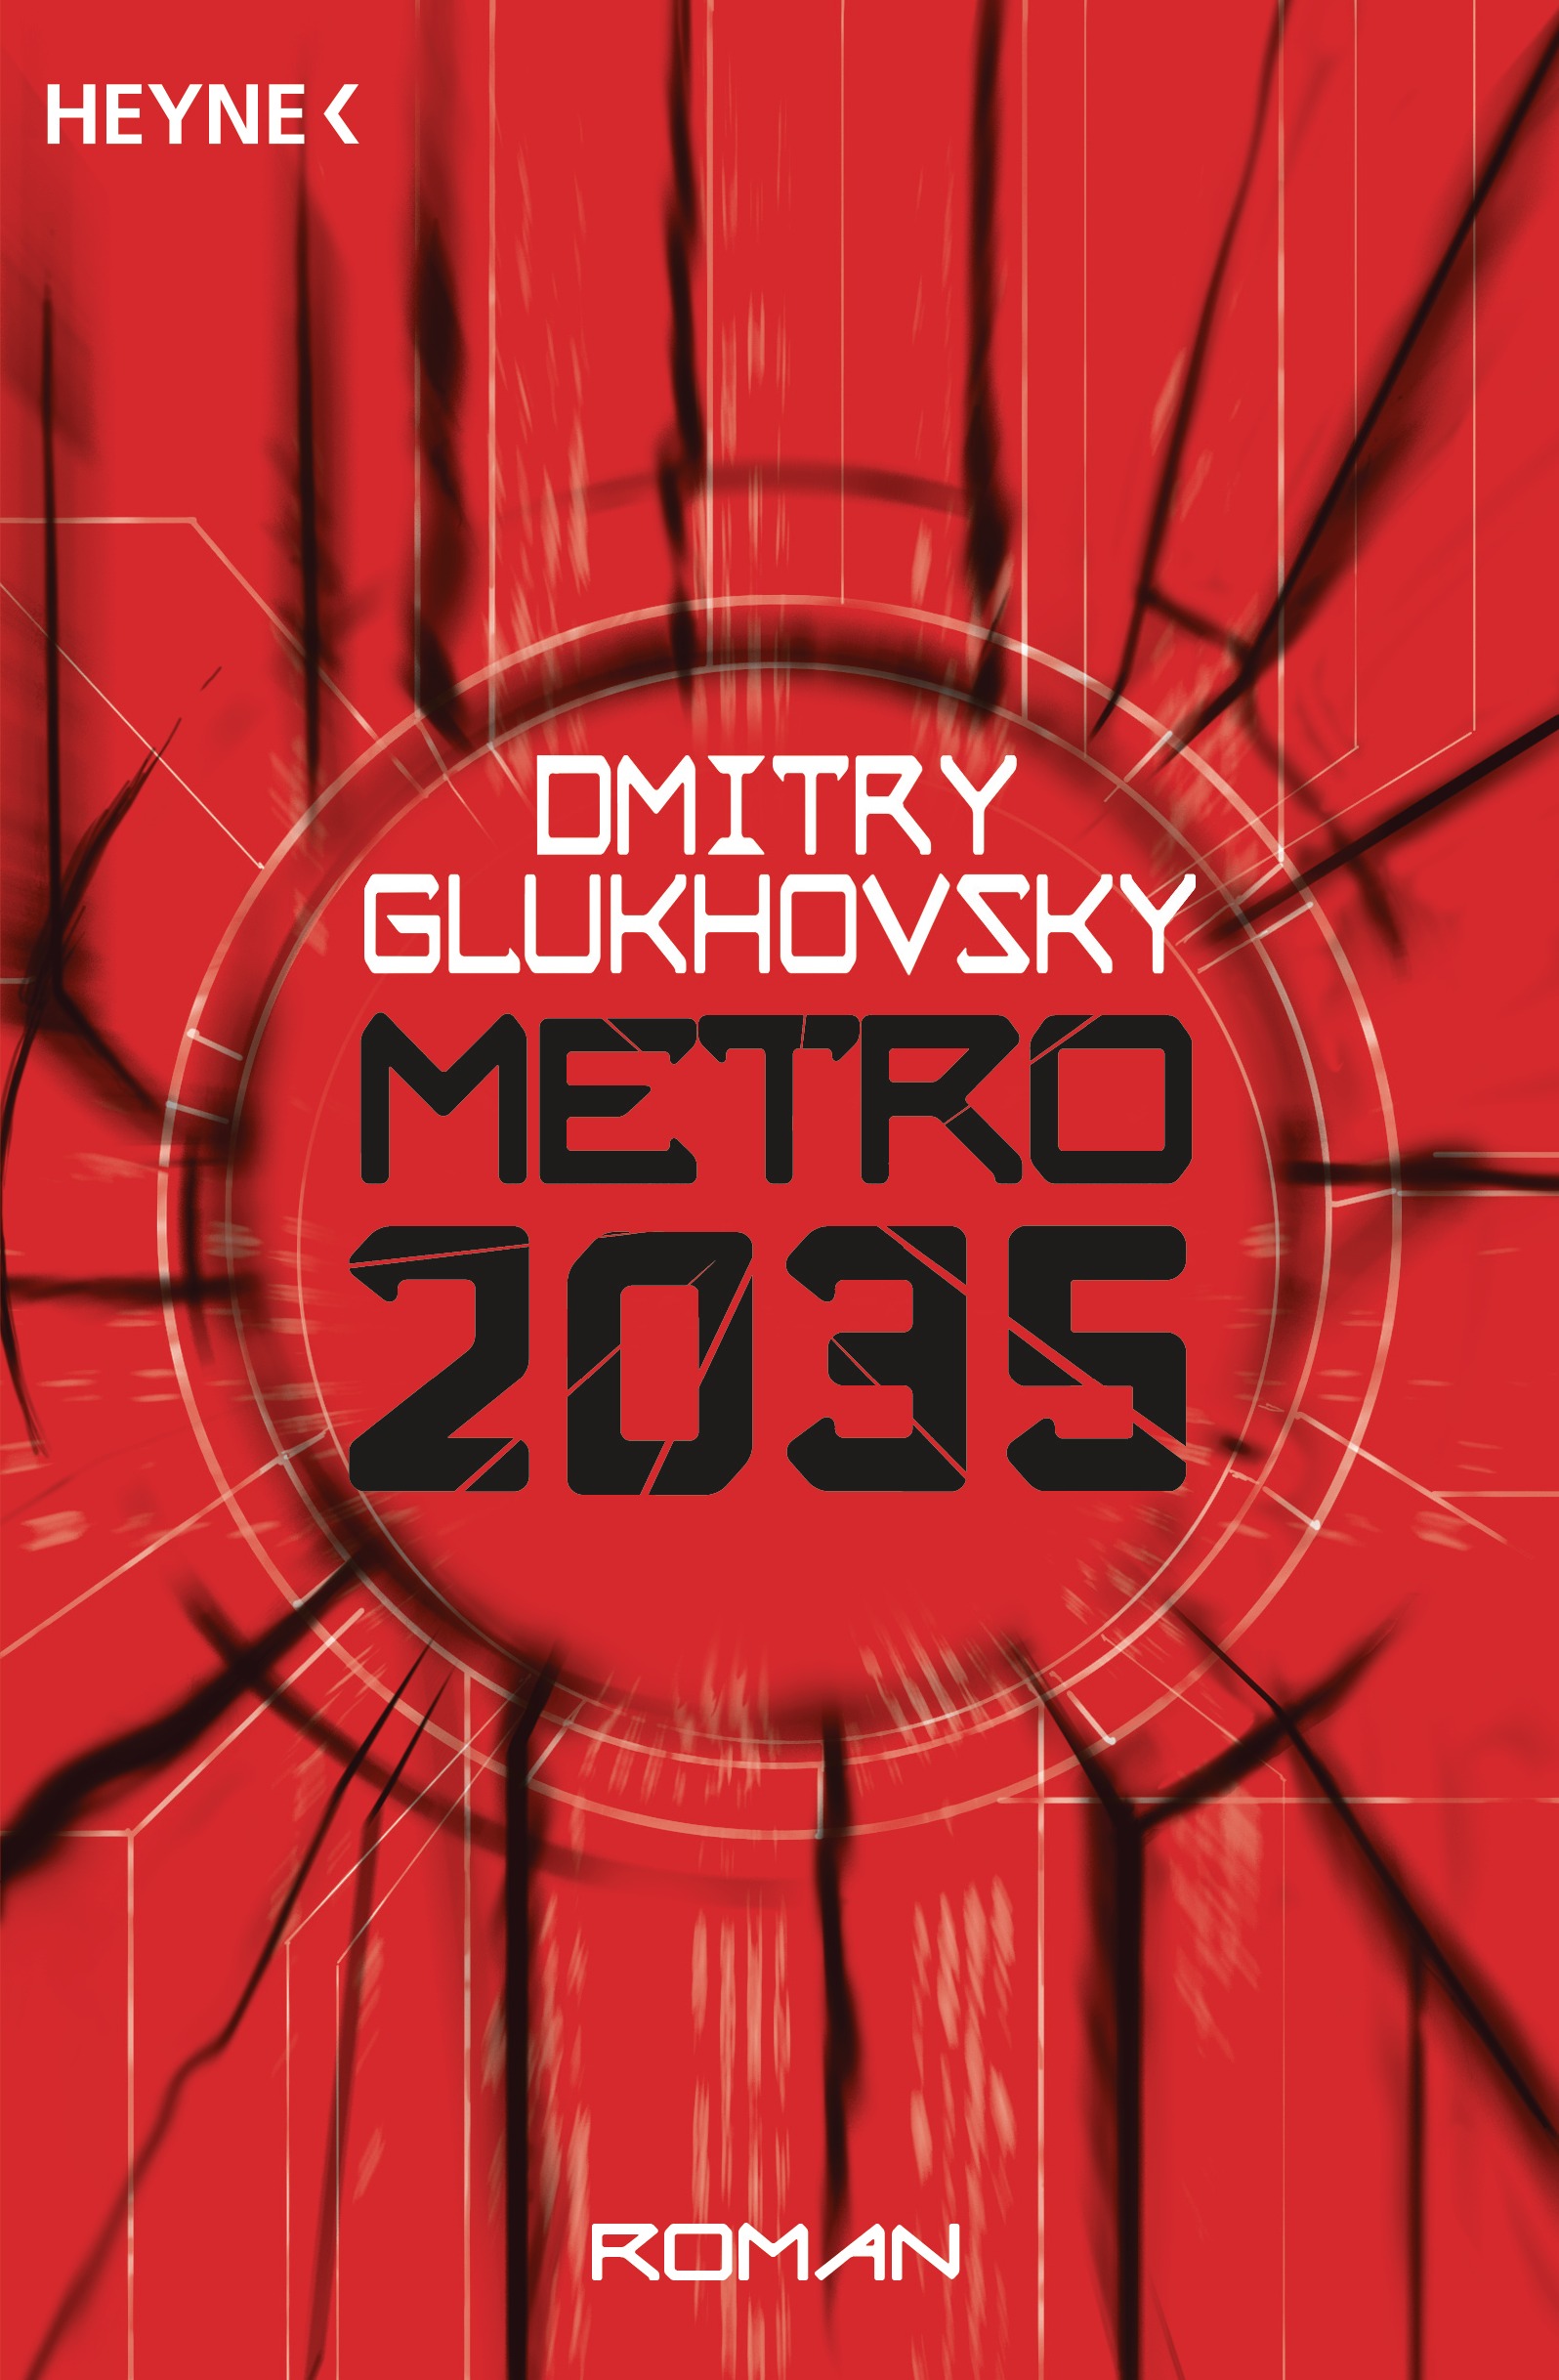 Metro 2035: Roman (2016, Heyne Verlag)